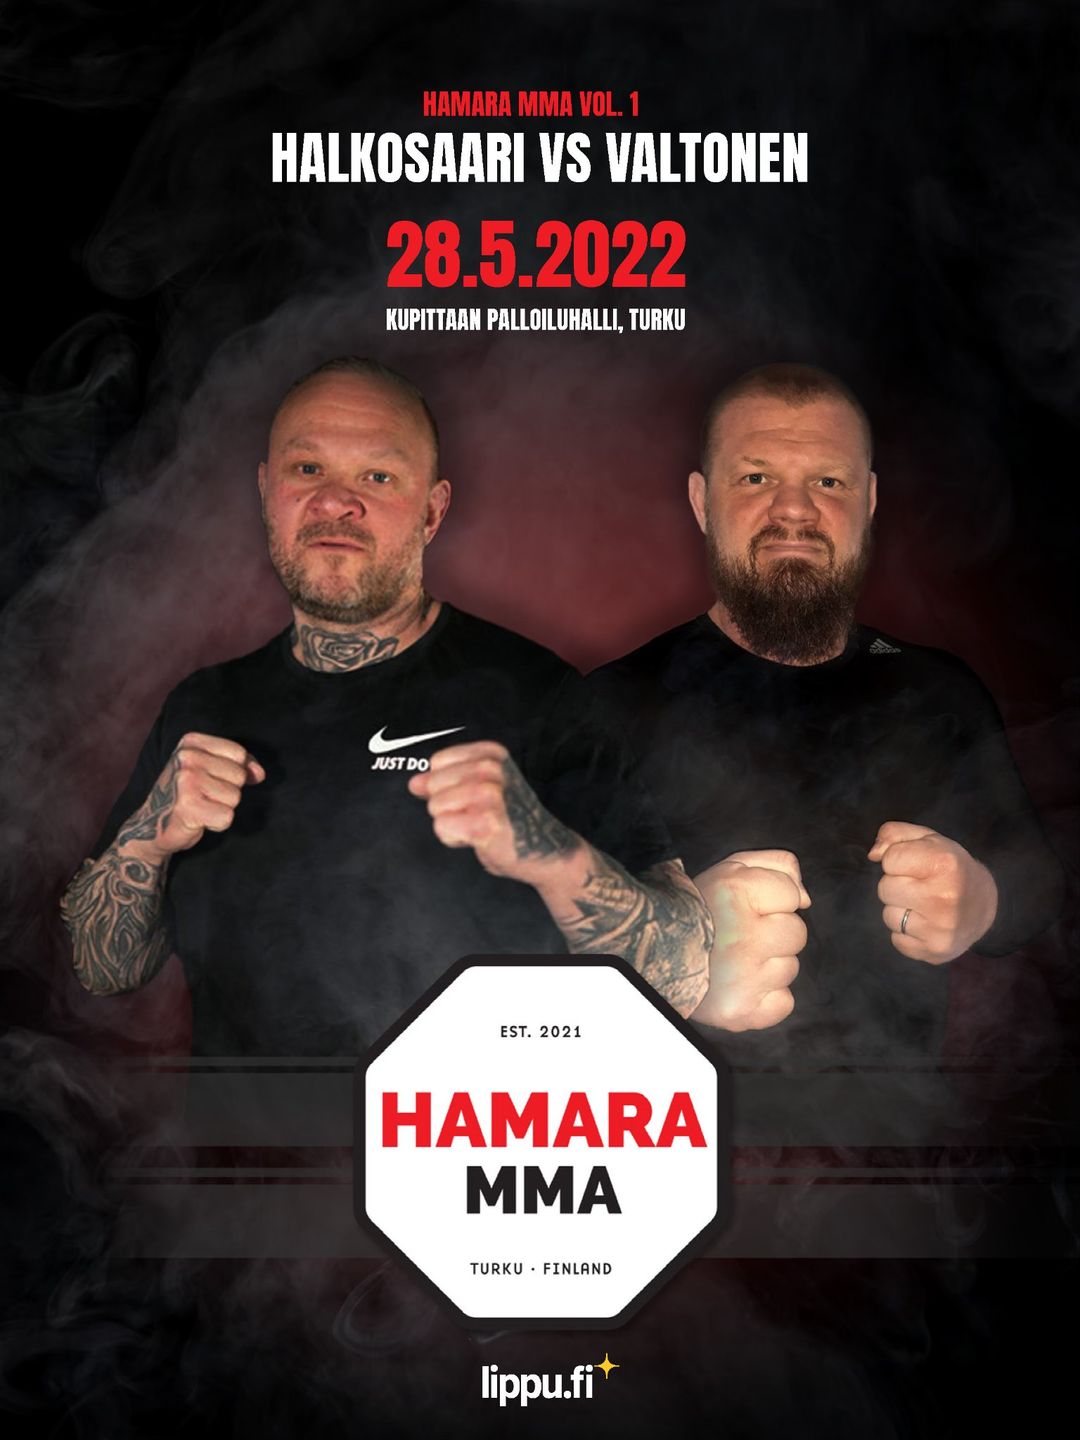 Hamara MMA 1 in Turku on Saturday